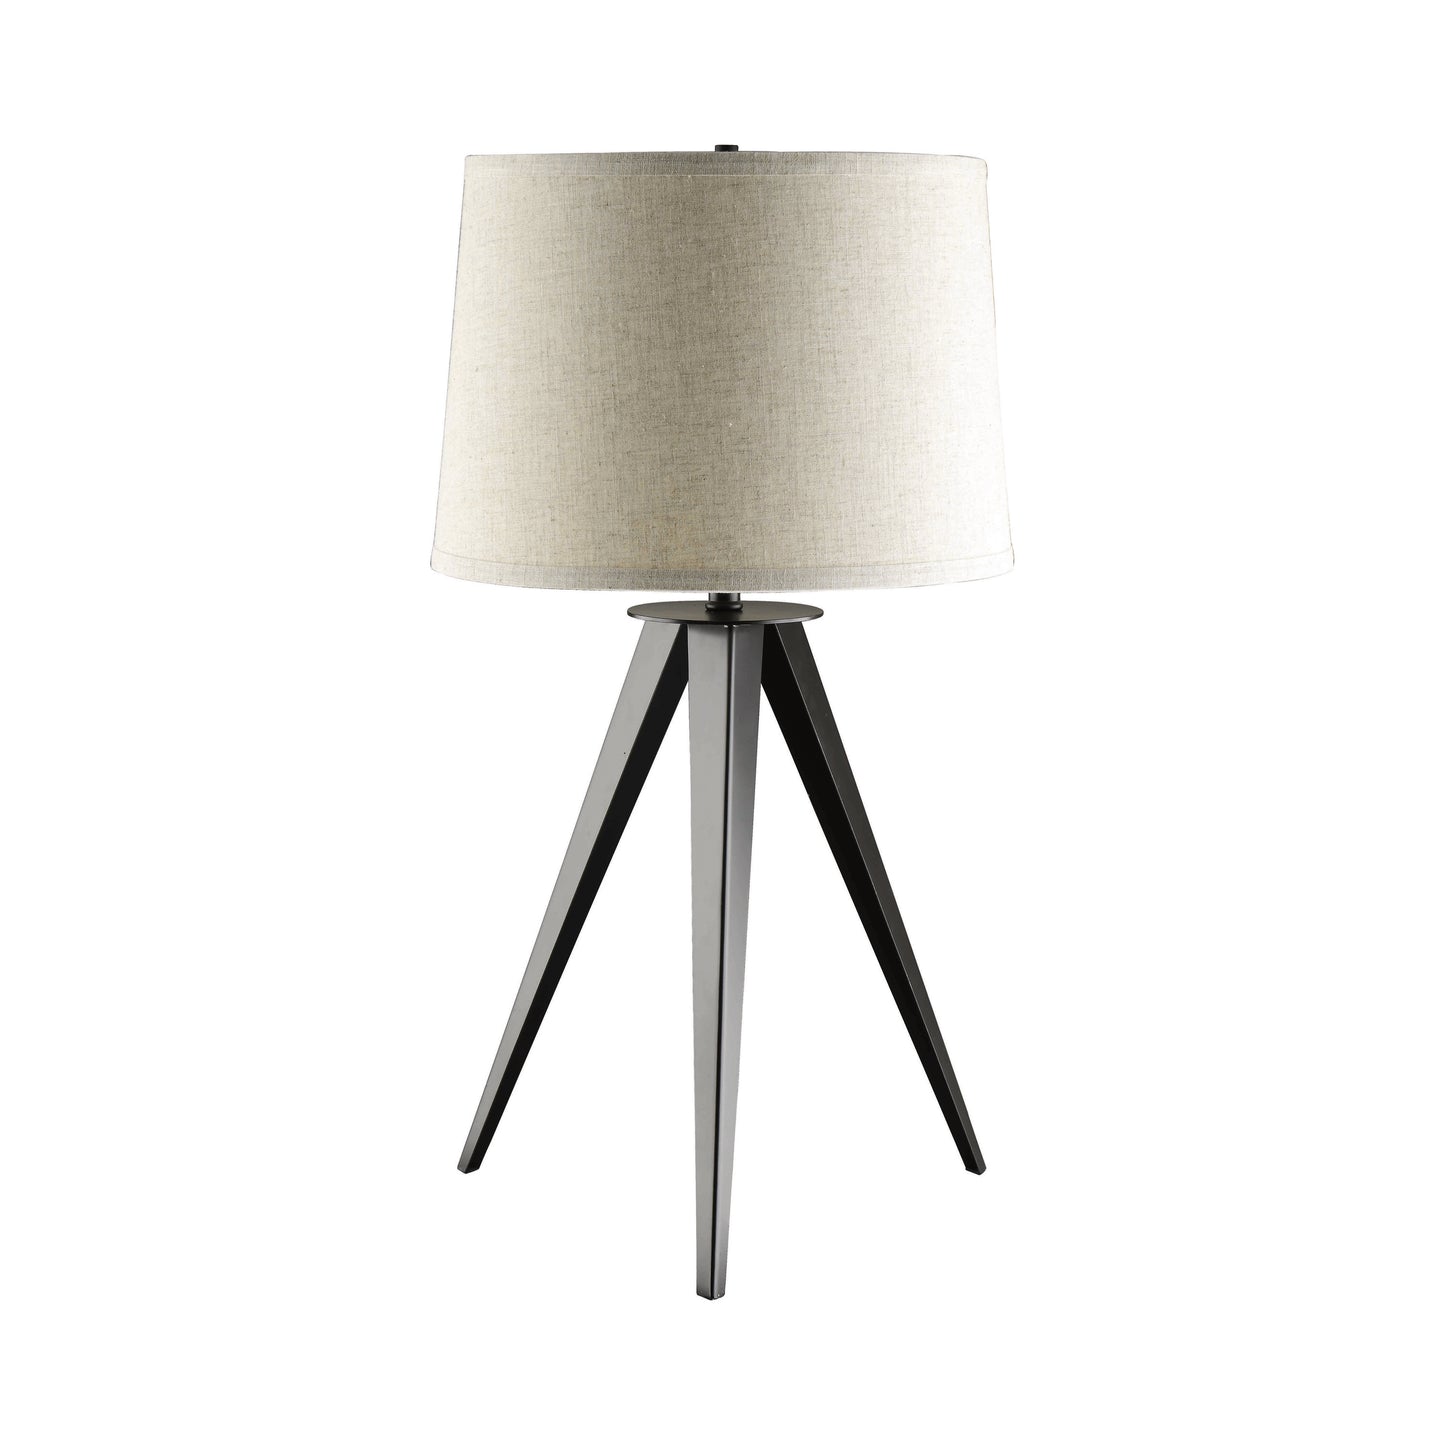 Tripod Base Table Lamp Black And Light Grey - 901644